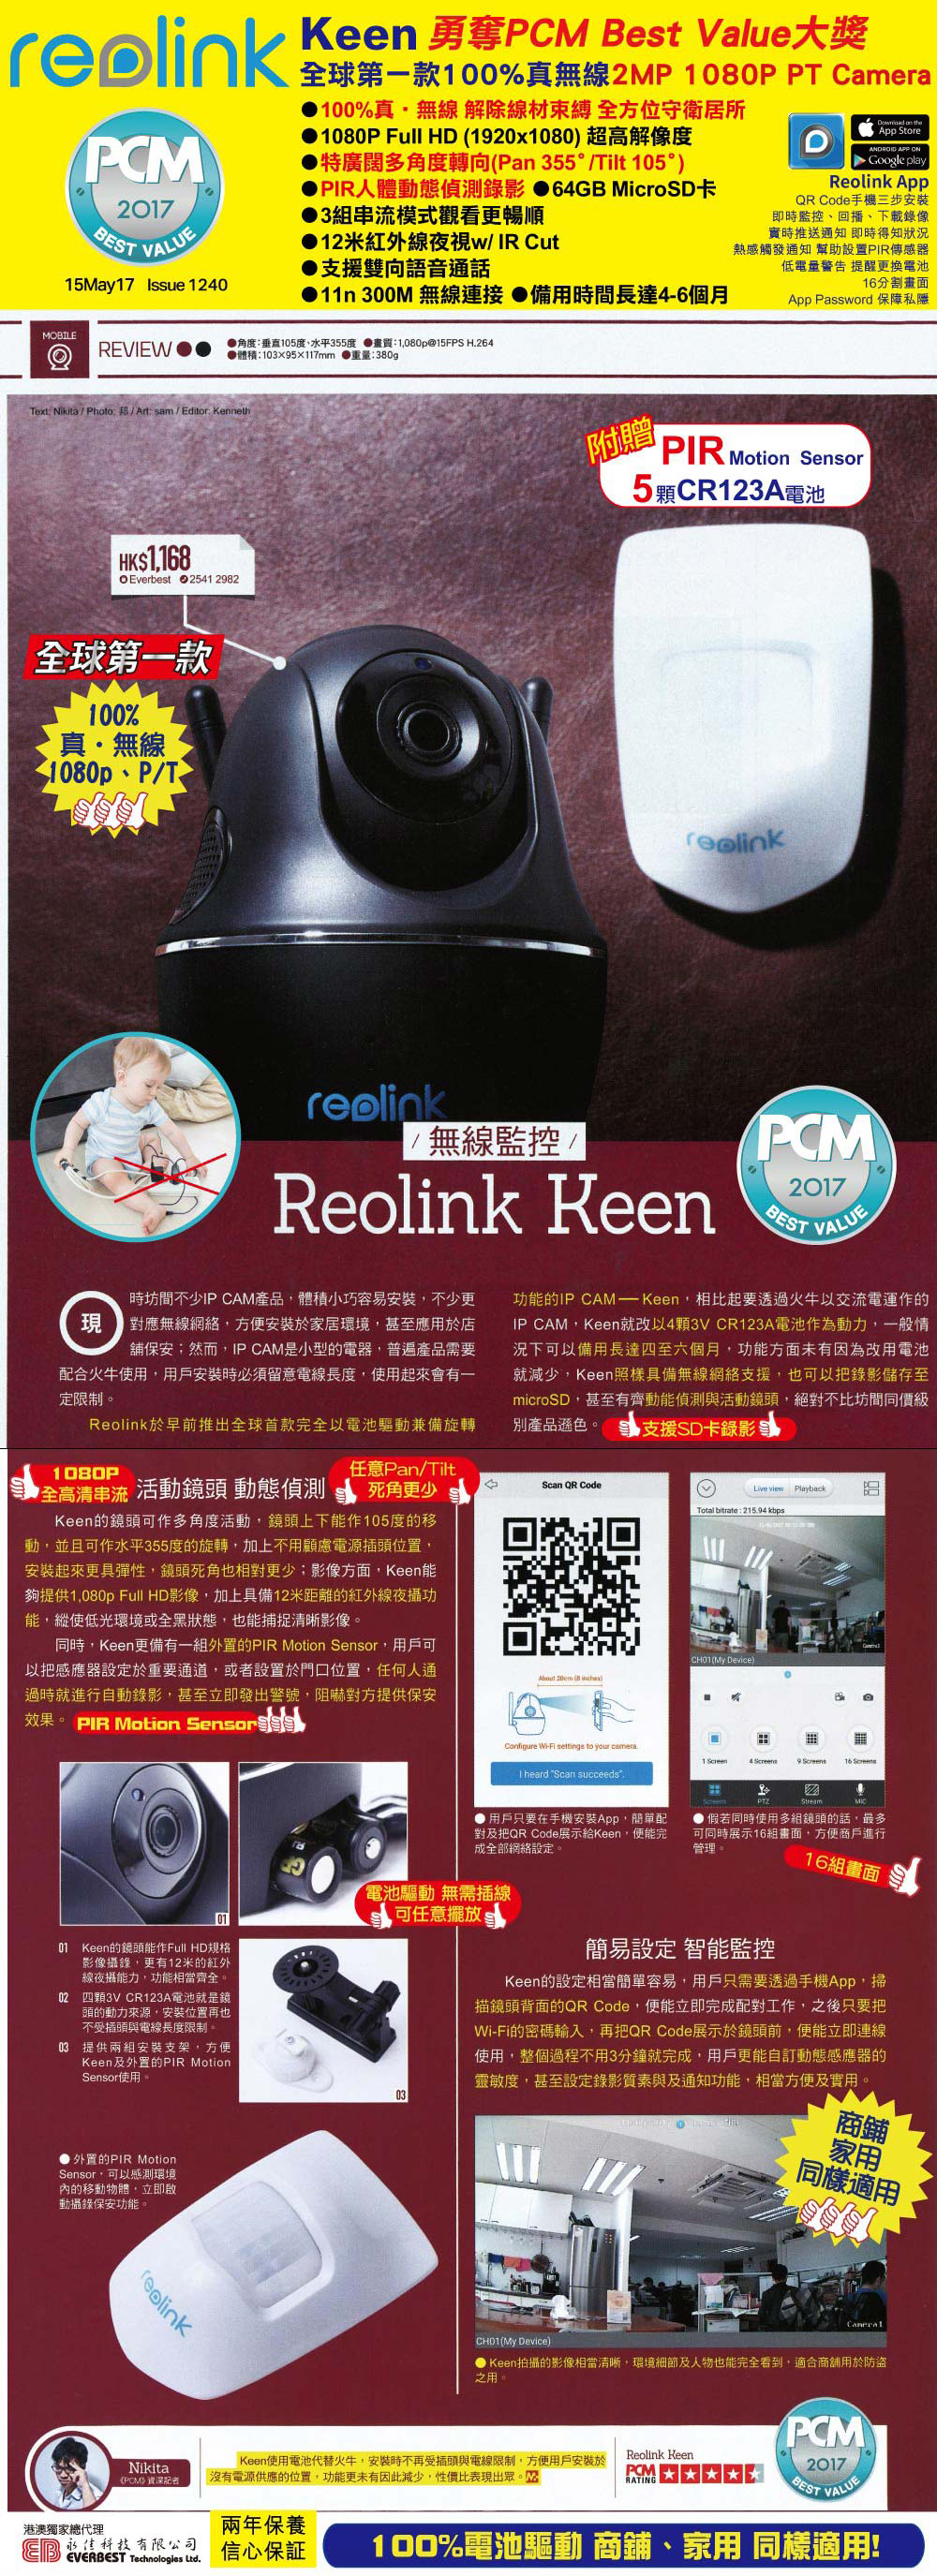 (Award)Reolink_Keen_PCM1240_Best-Value_15May17_Full